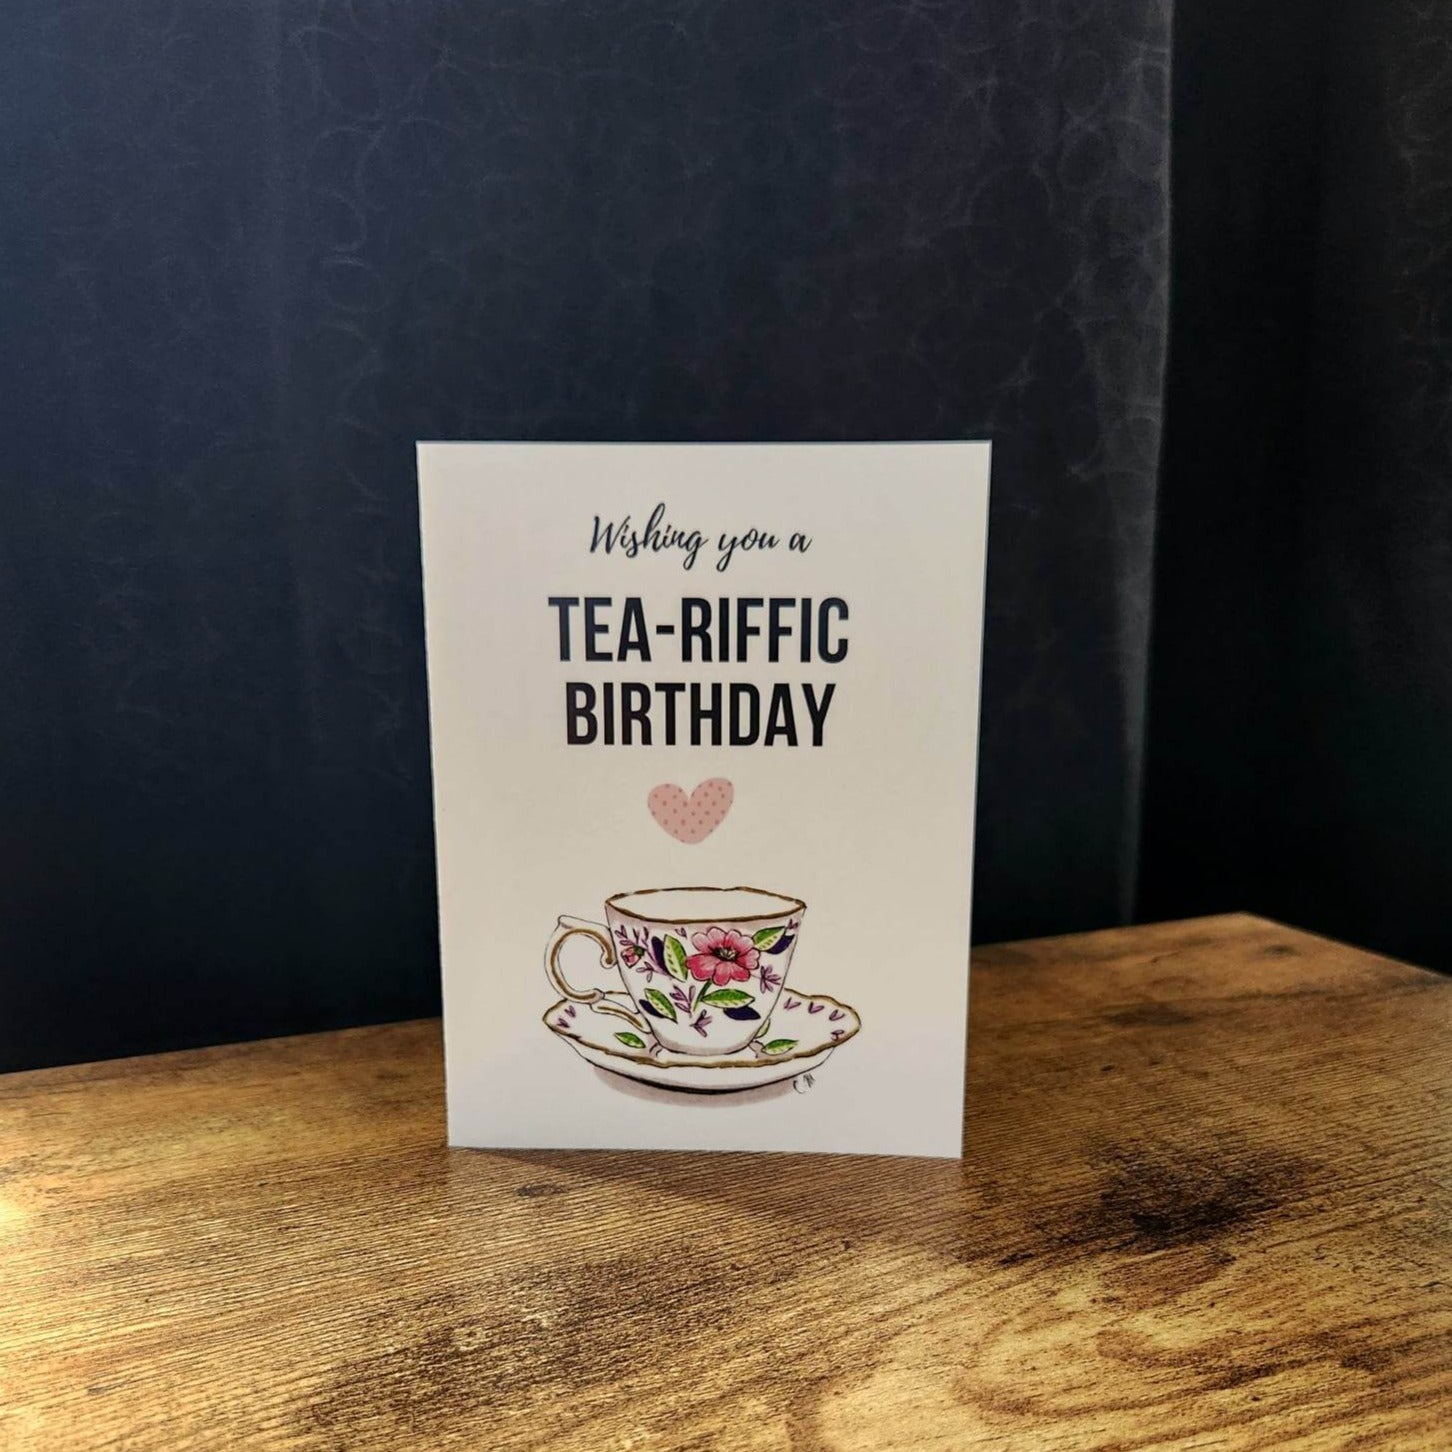 One year closer to granny panties, Funny birthday card, Birthday